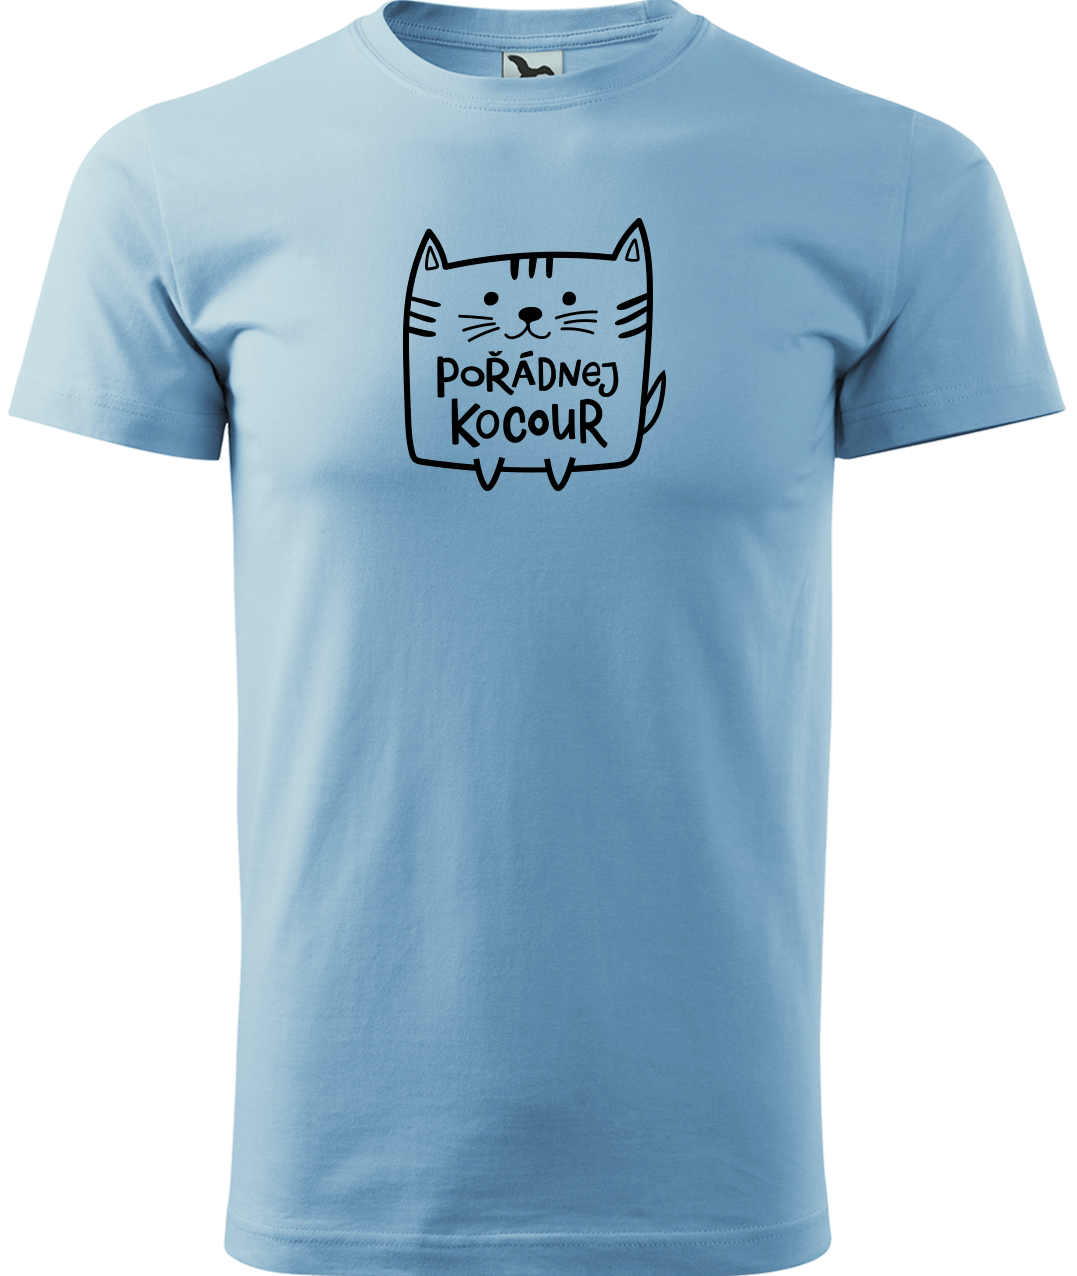 Pánské tričko s kočkou - Pořádnej kocour Velikost: M, Barva: Nebesky modrá (15)